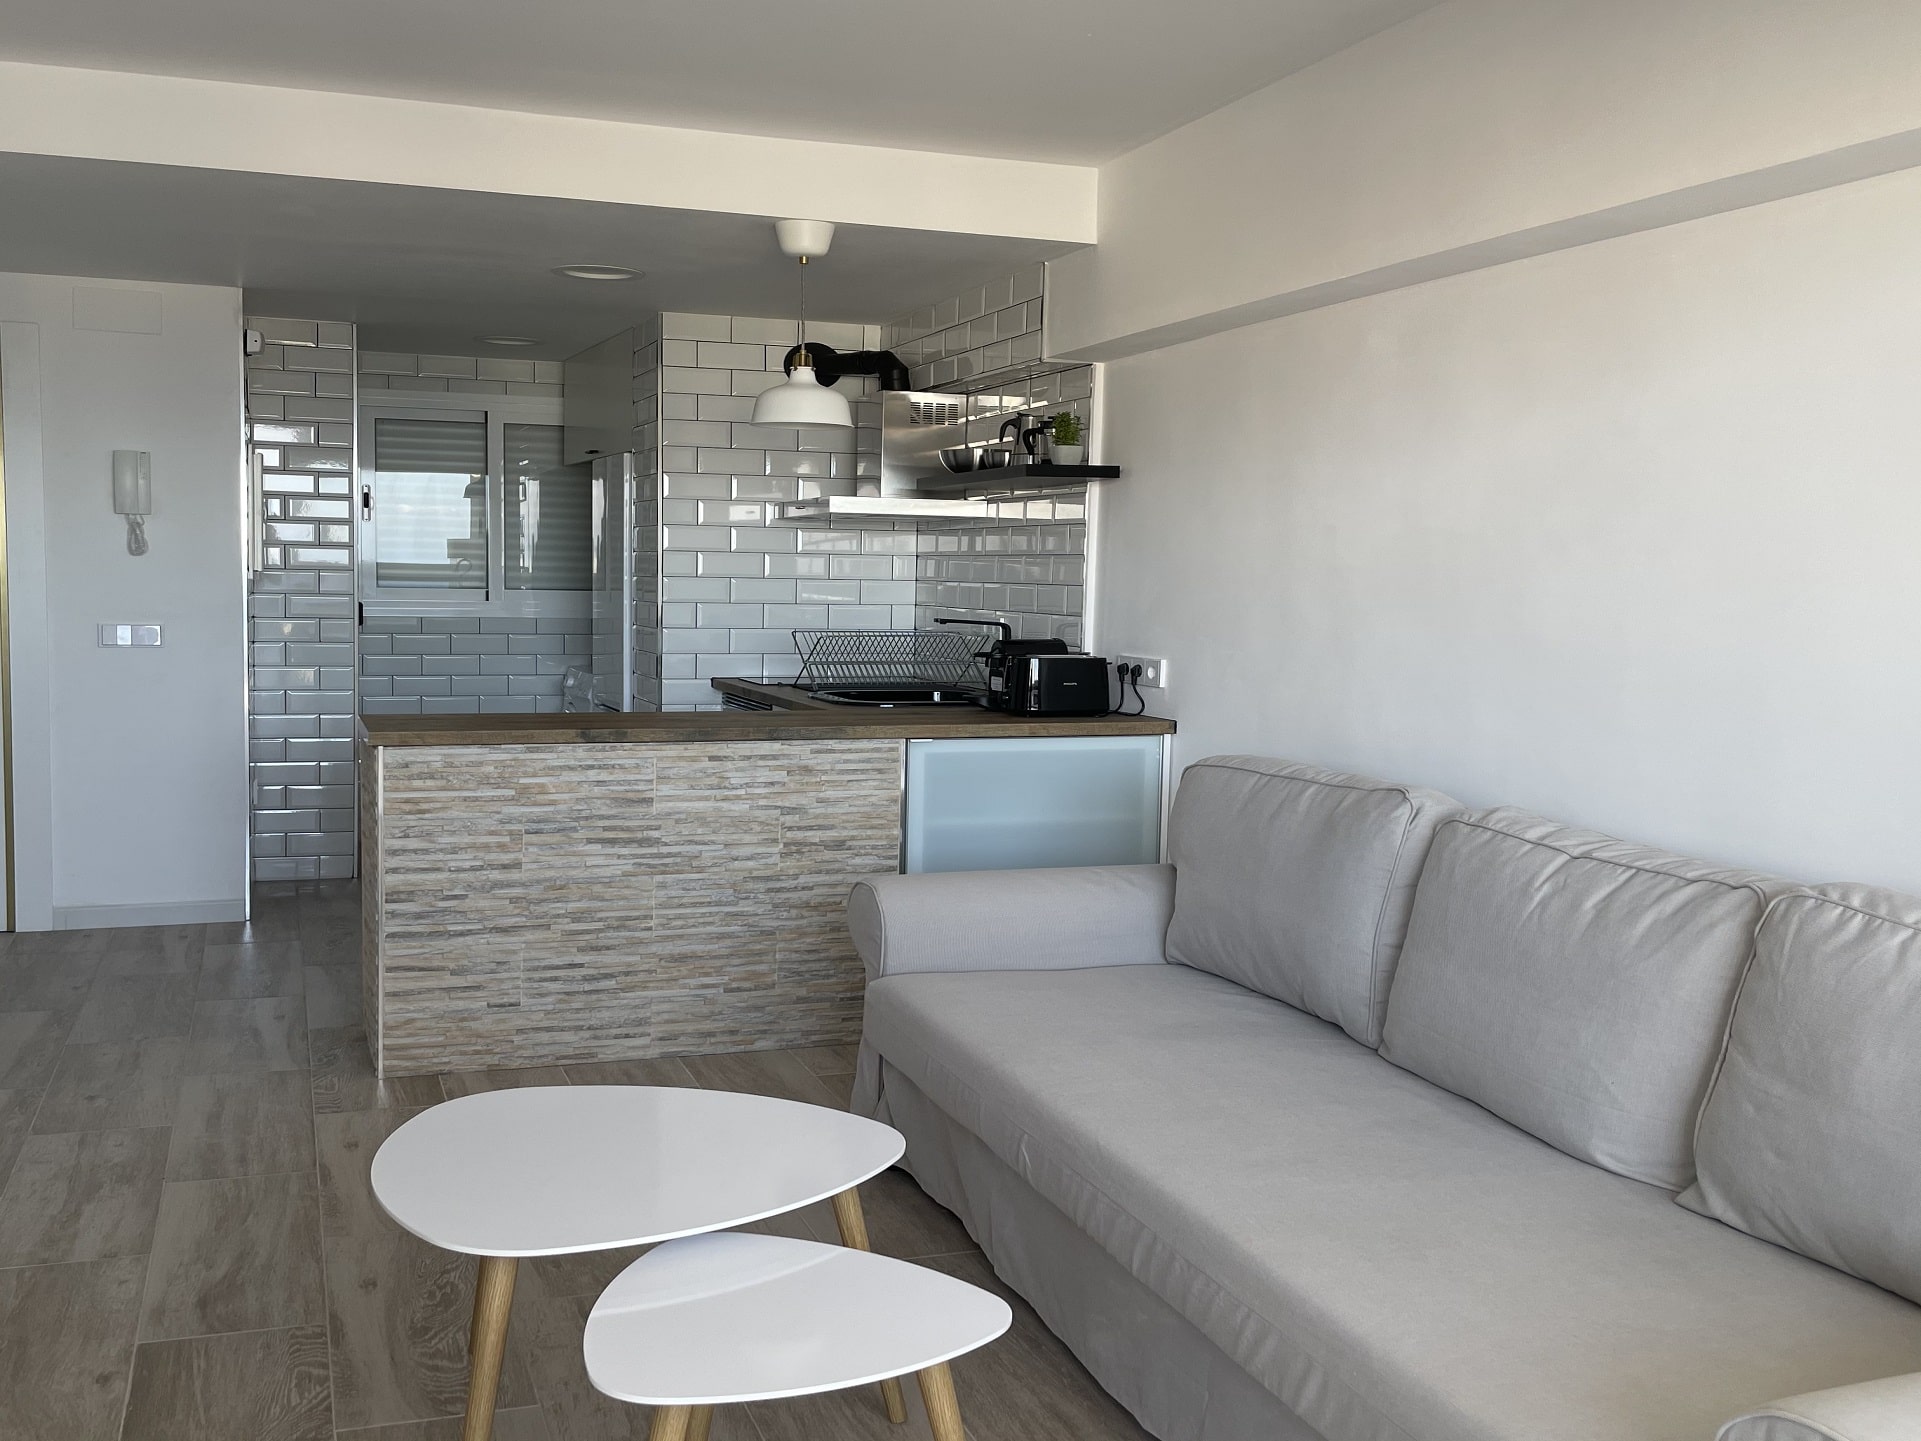 salon-con-cocina-abierta-living-room-with-open-kitchen-min